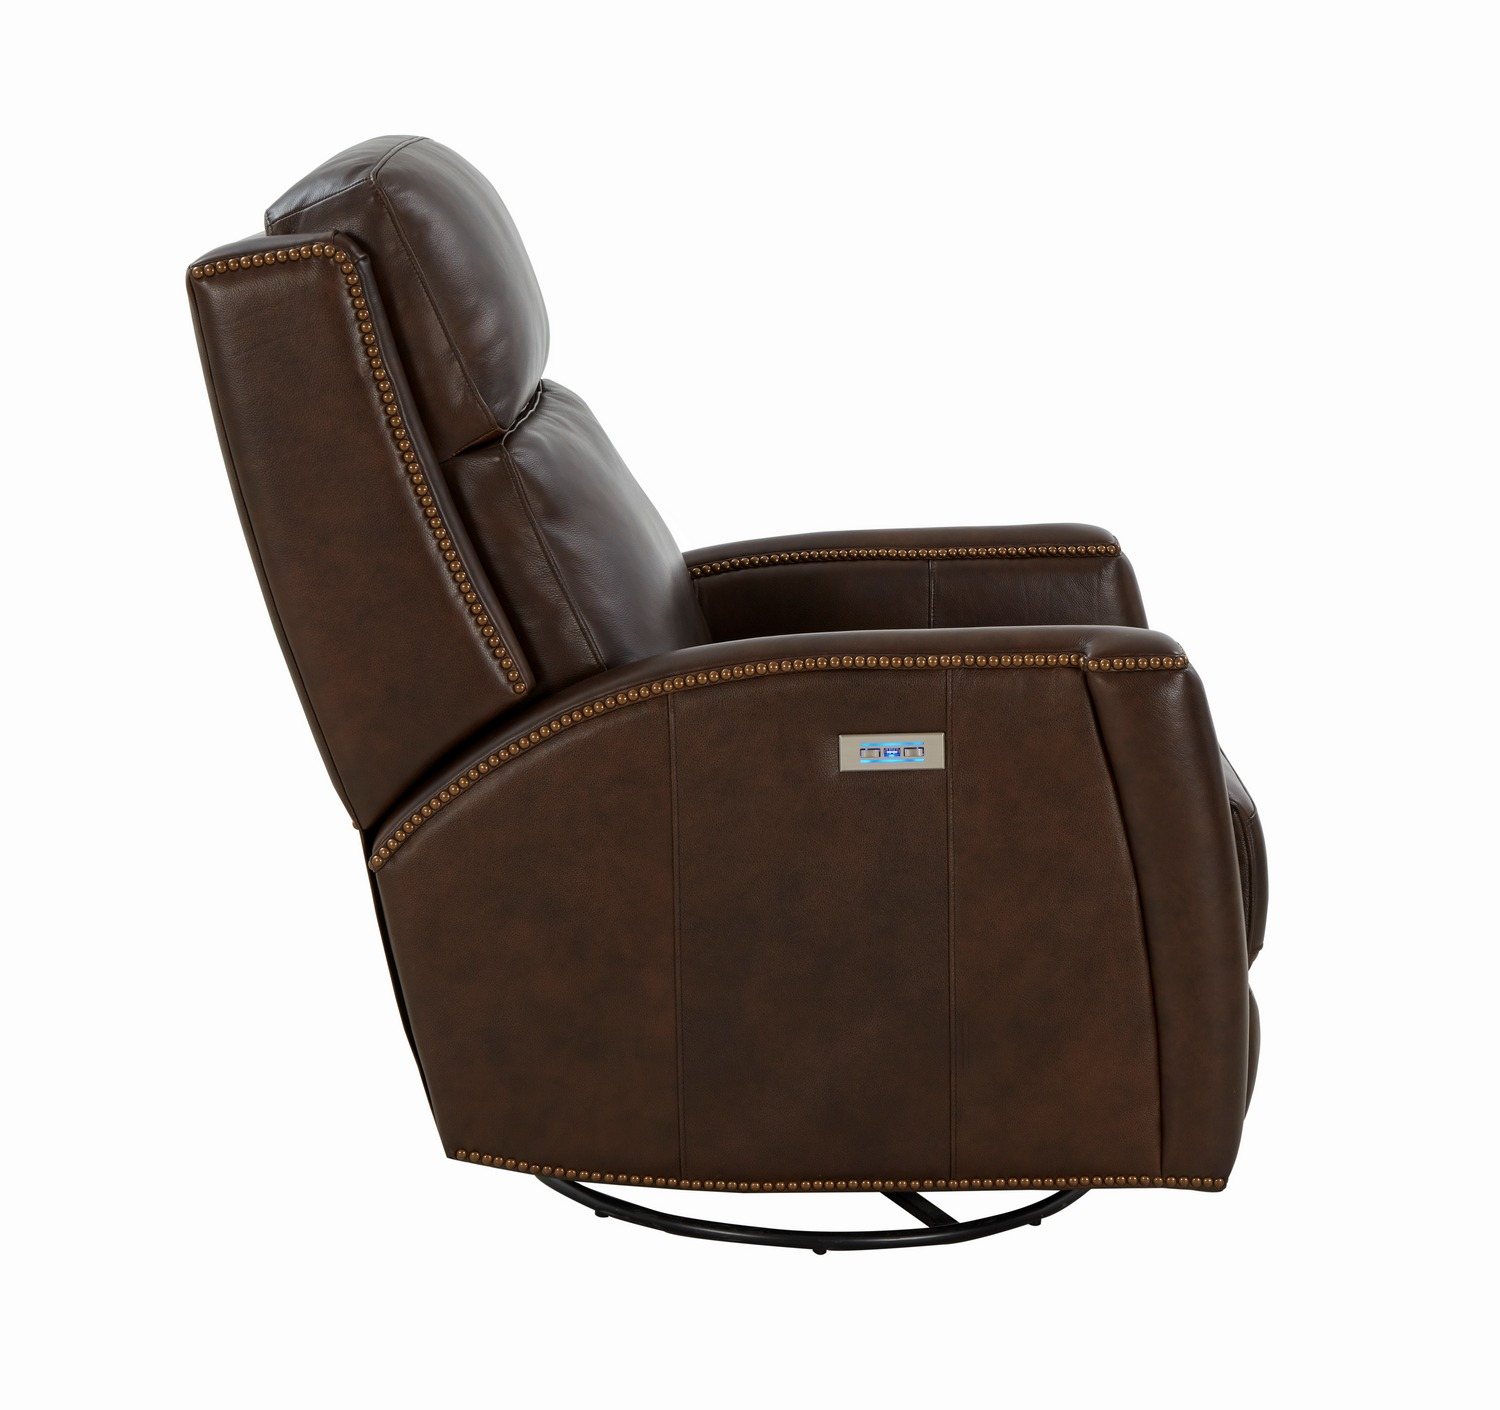 Barcalounger Brandt Power Swivel Glider Recliner Chair with Power Head Rest - Ashford Walnut/All Leather